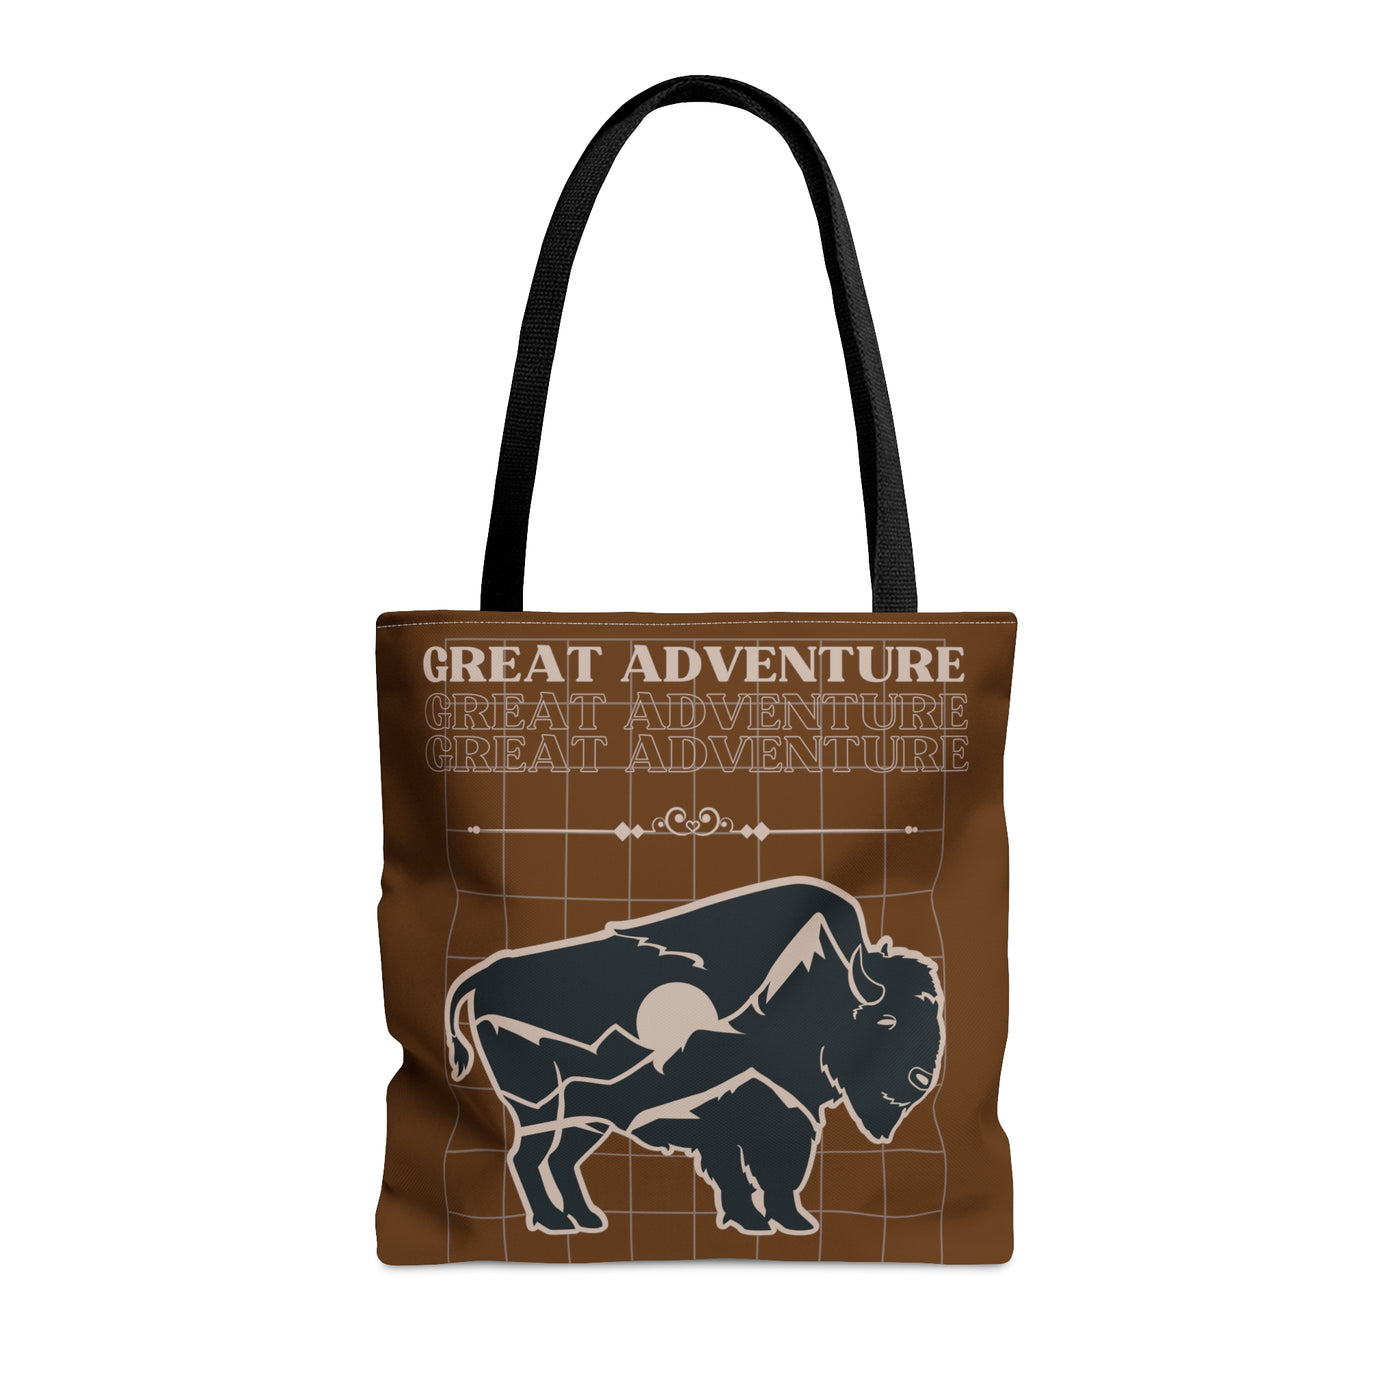 Printed Tote Bags | Great Adventure Tote Bag | Let's Travel